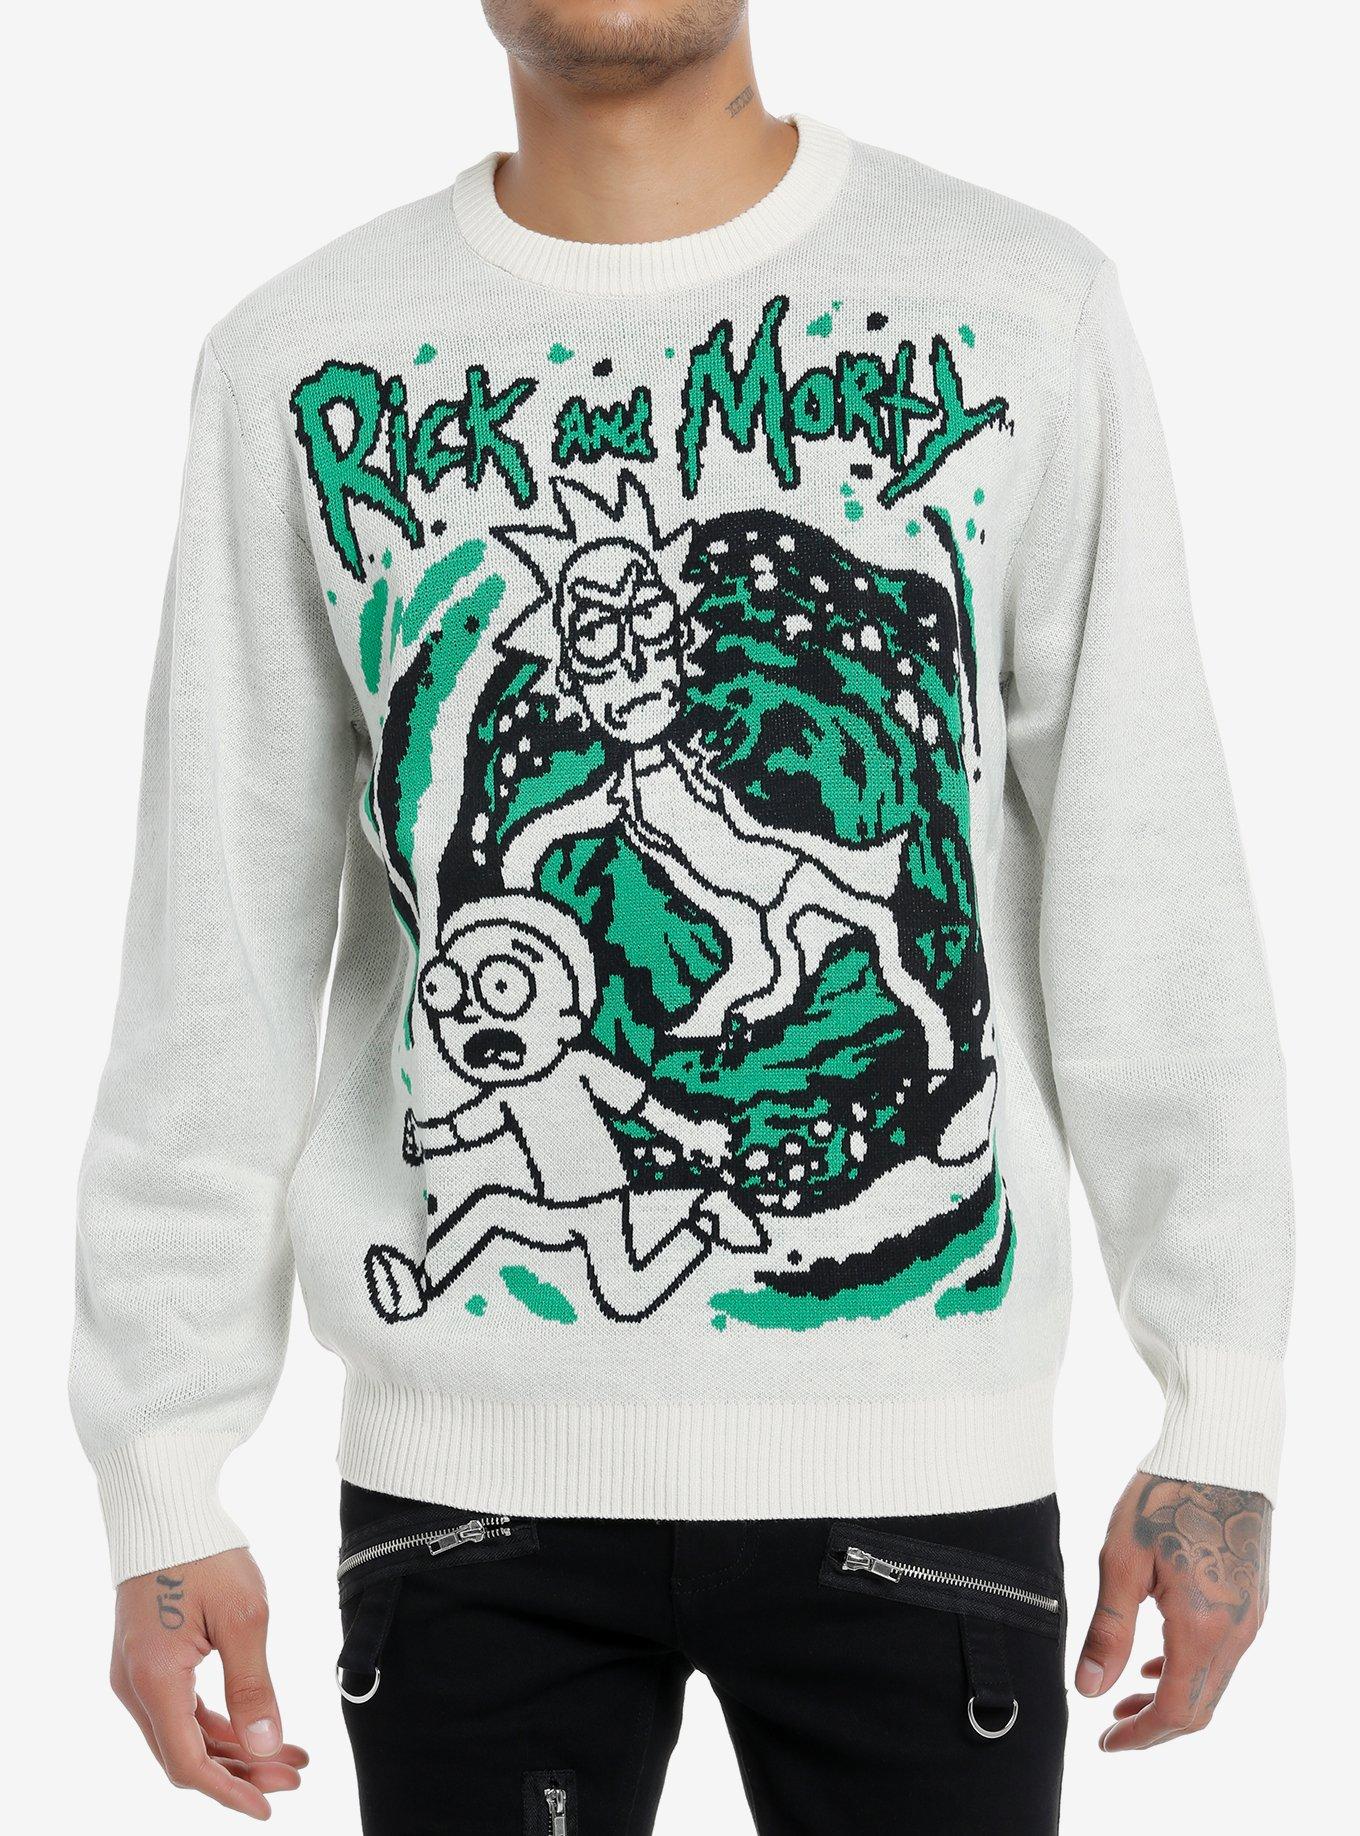 Rick And Morty Portal Intarsia Sweater